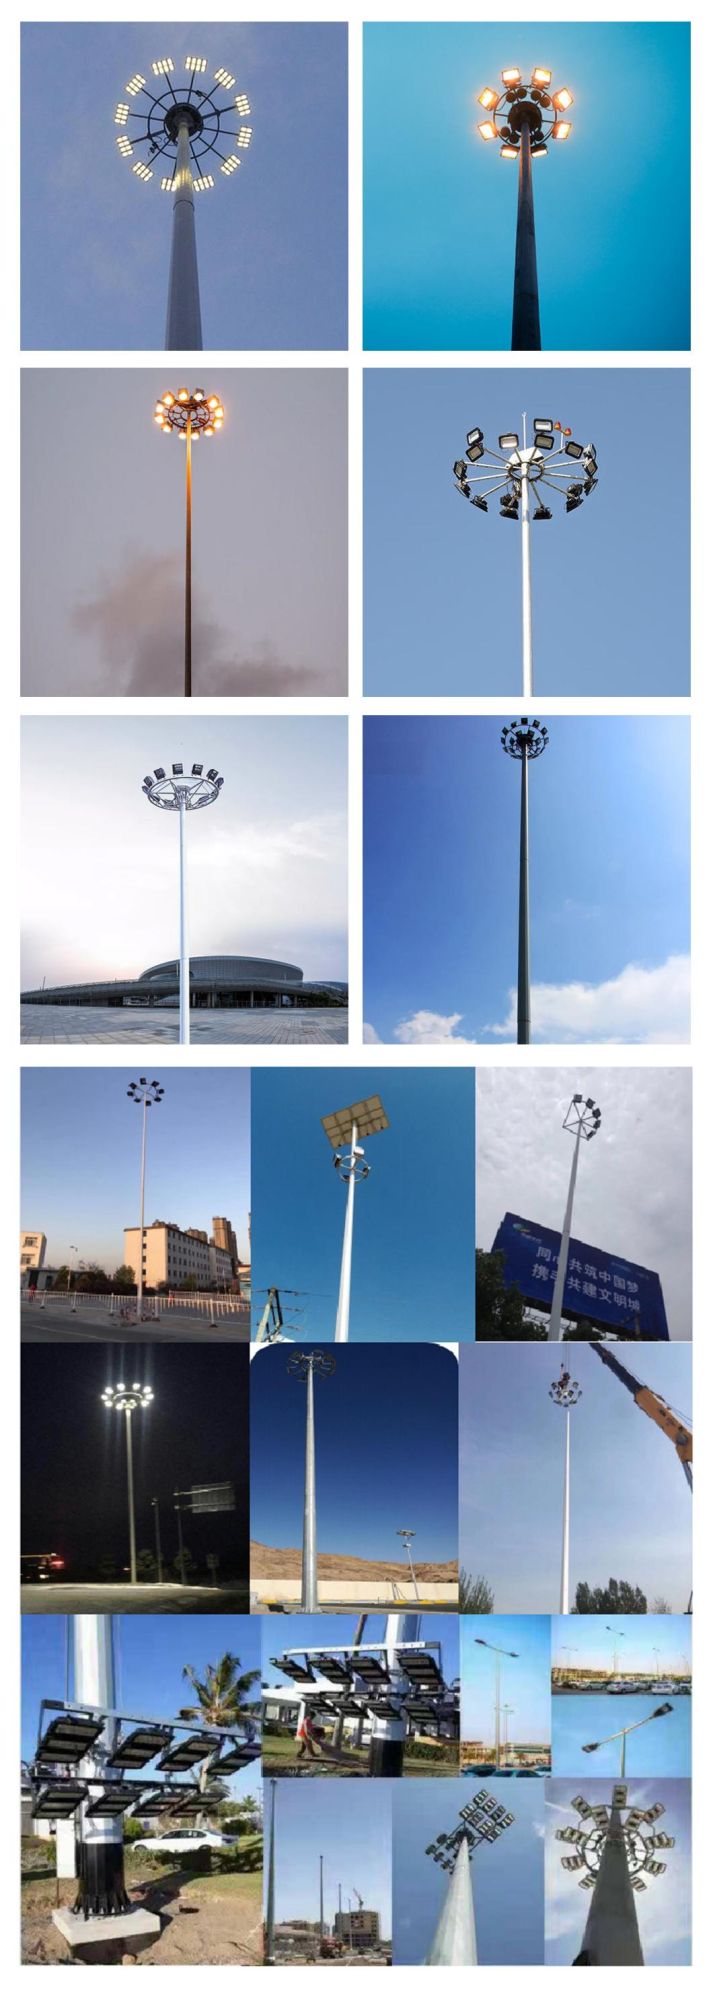 15m 20m 25m 30m 35mm High Mast Lighting Pole with LED Flood Light for Square Lighting